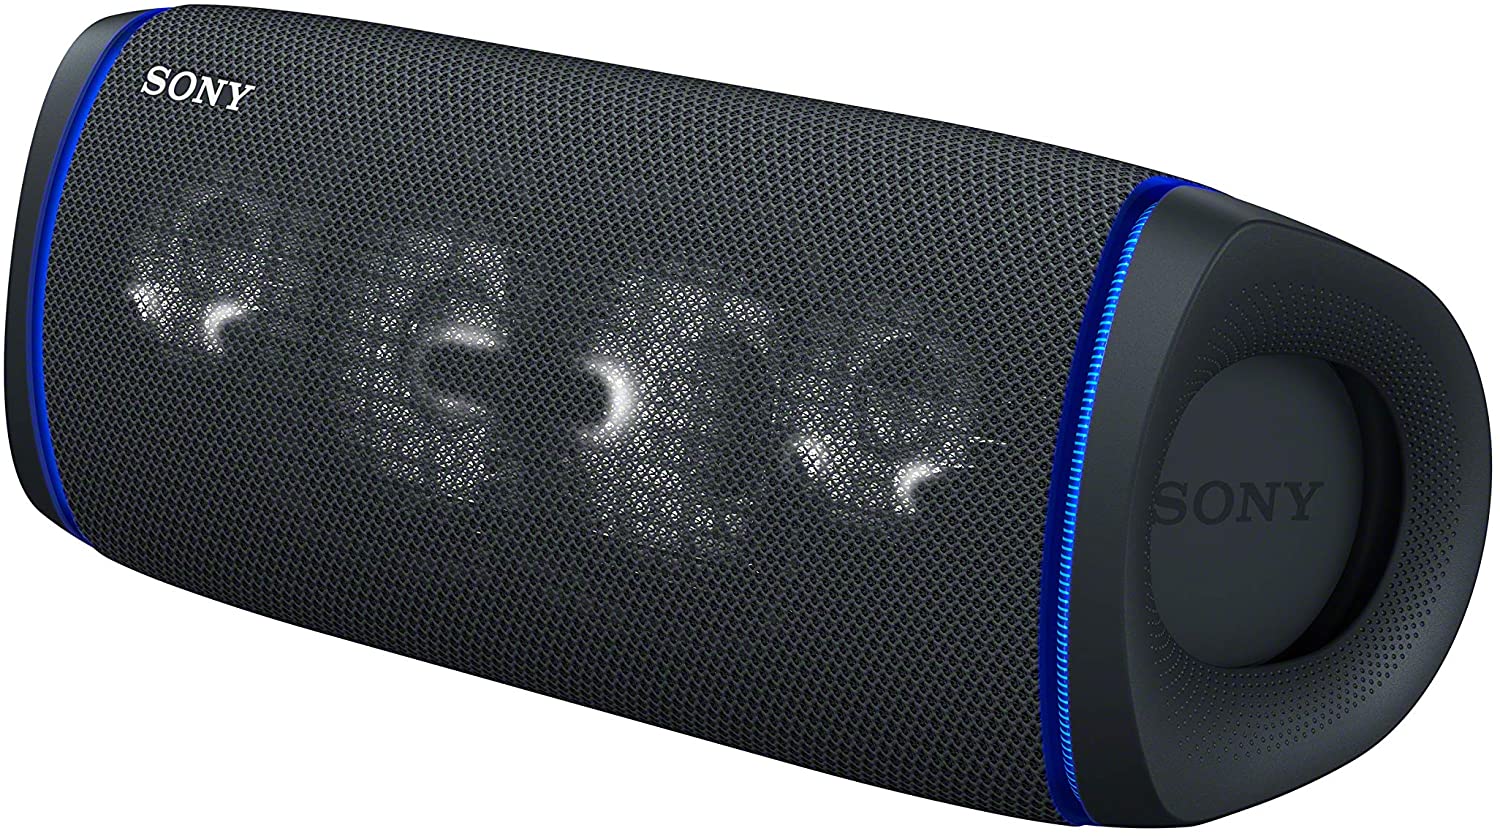 Sony SRS-XB43 EXTRA BASS Wireless Portable Bluetooth Speaker - Black (New)